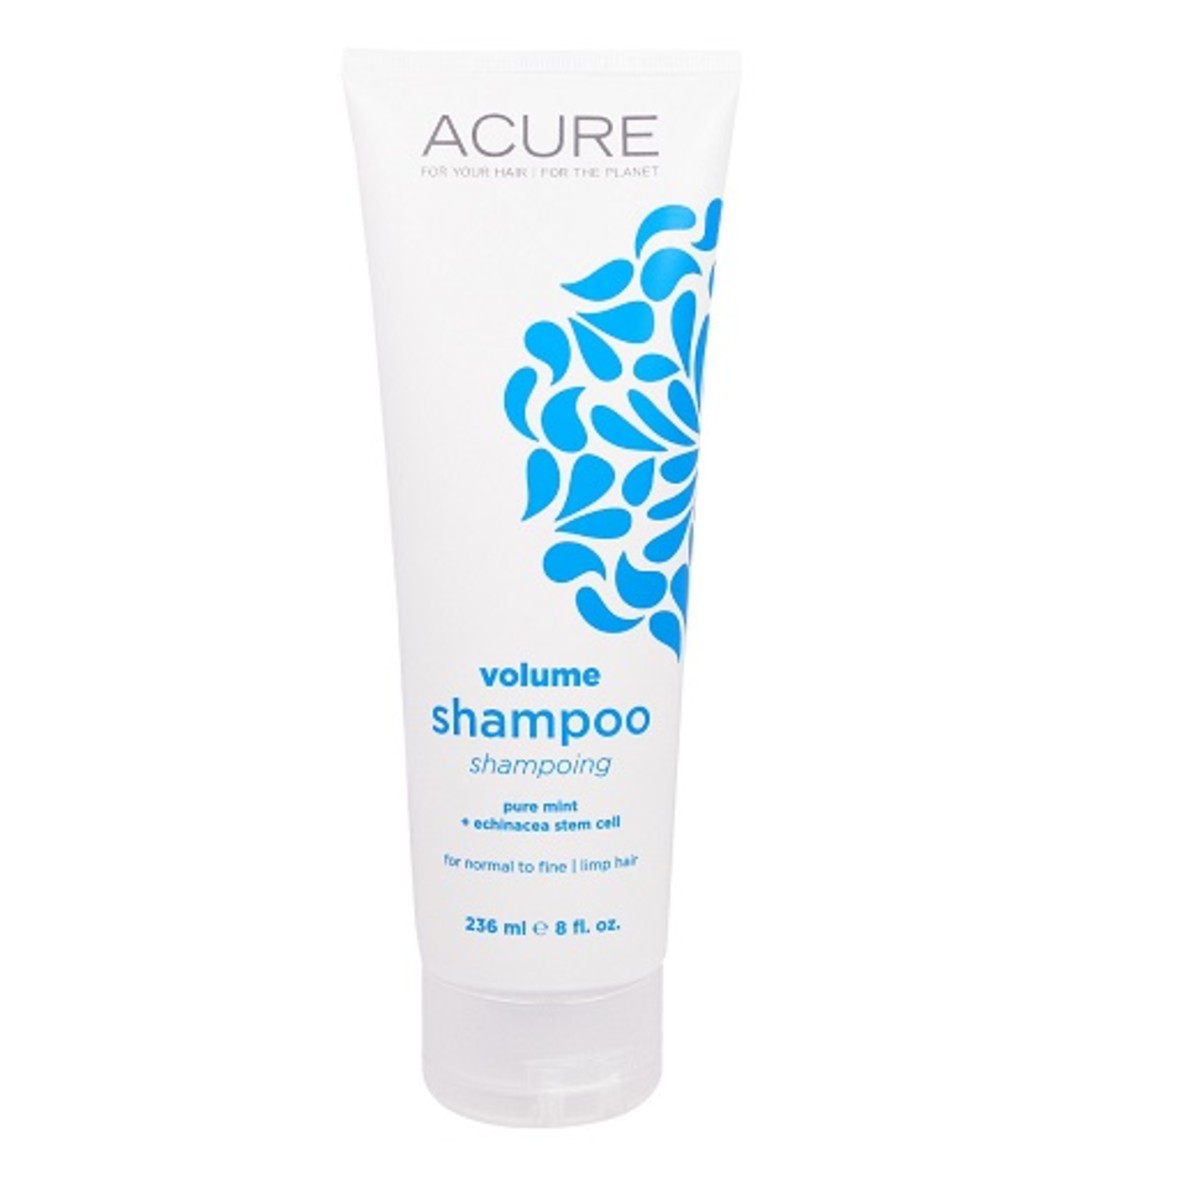 Acure Organics Volume Shampoo